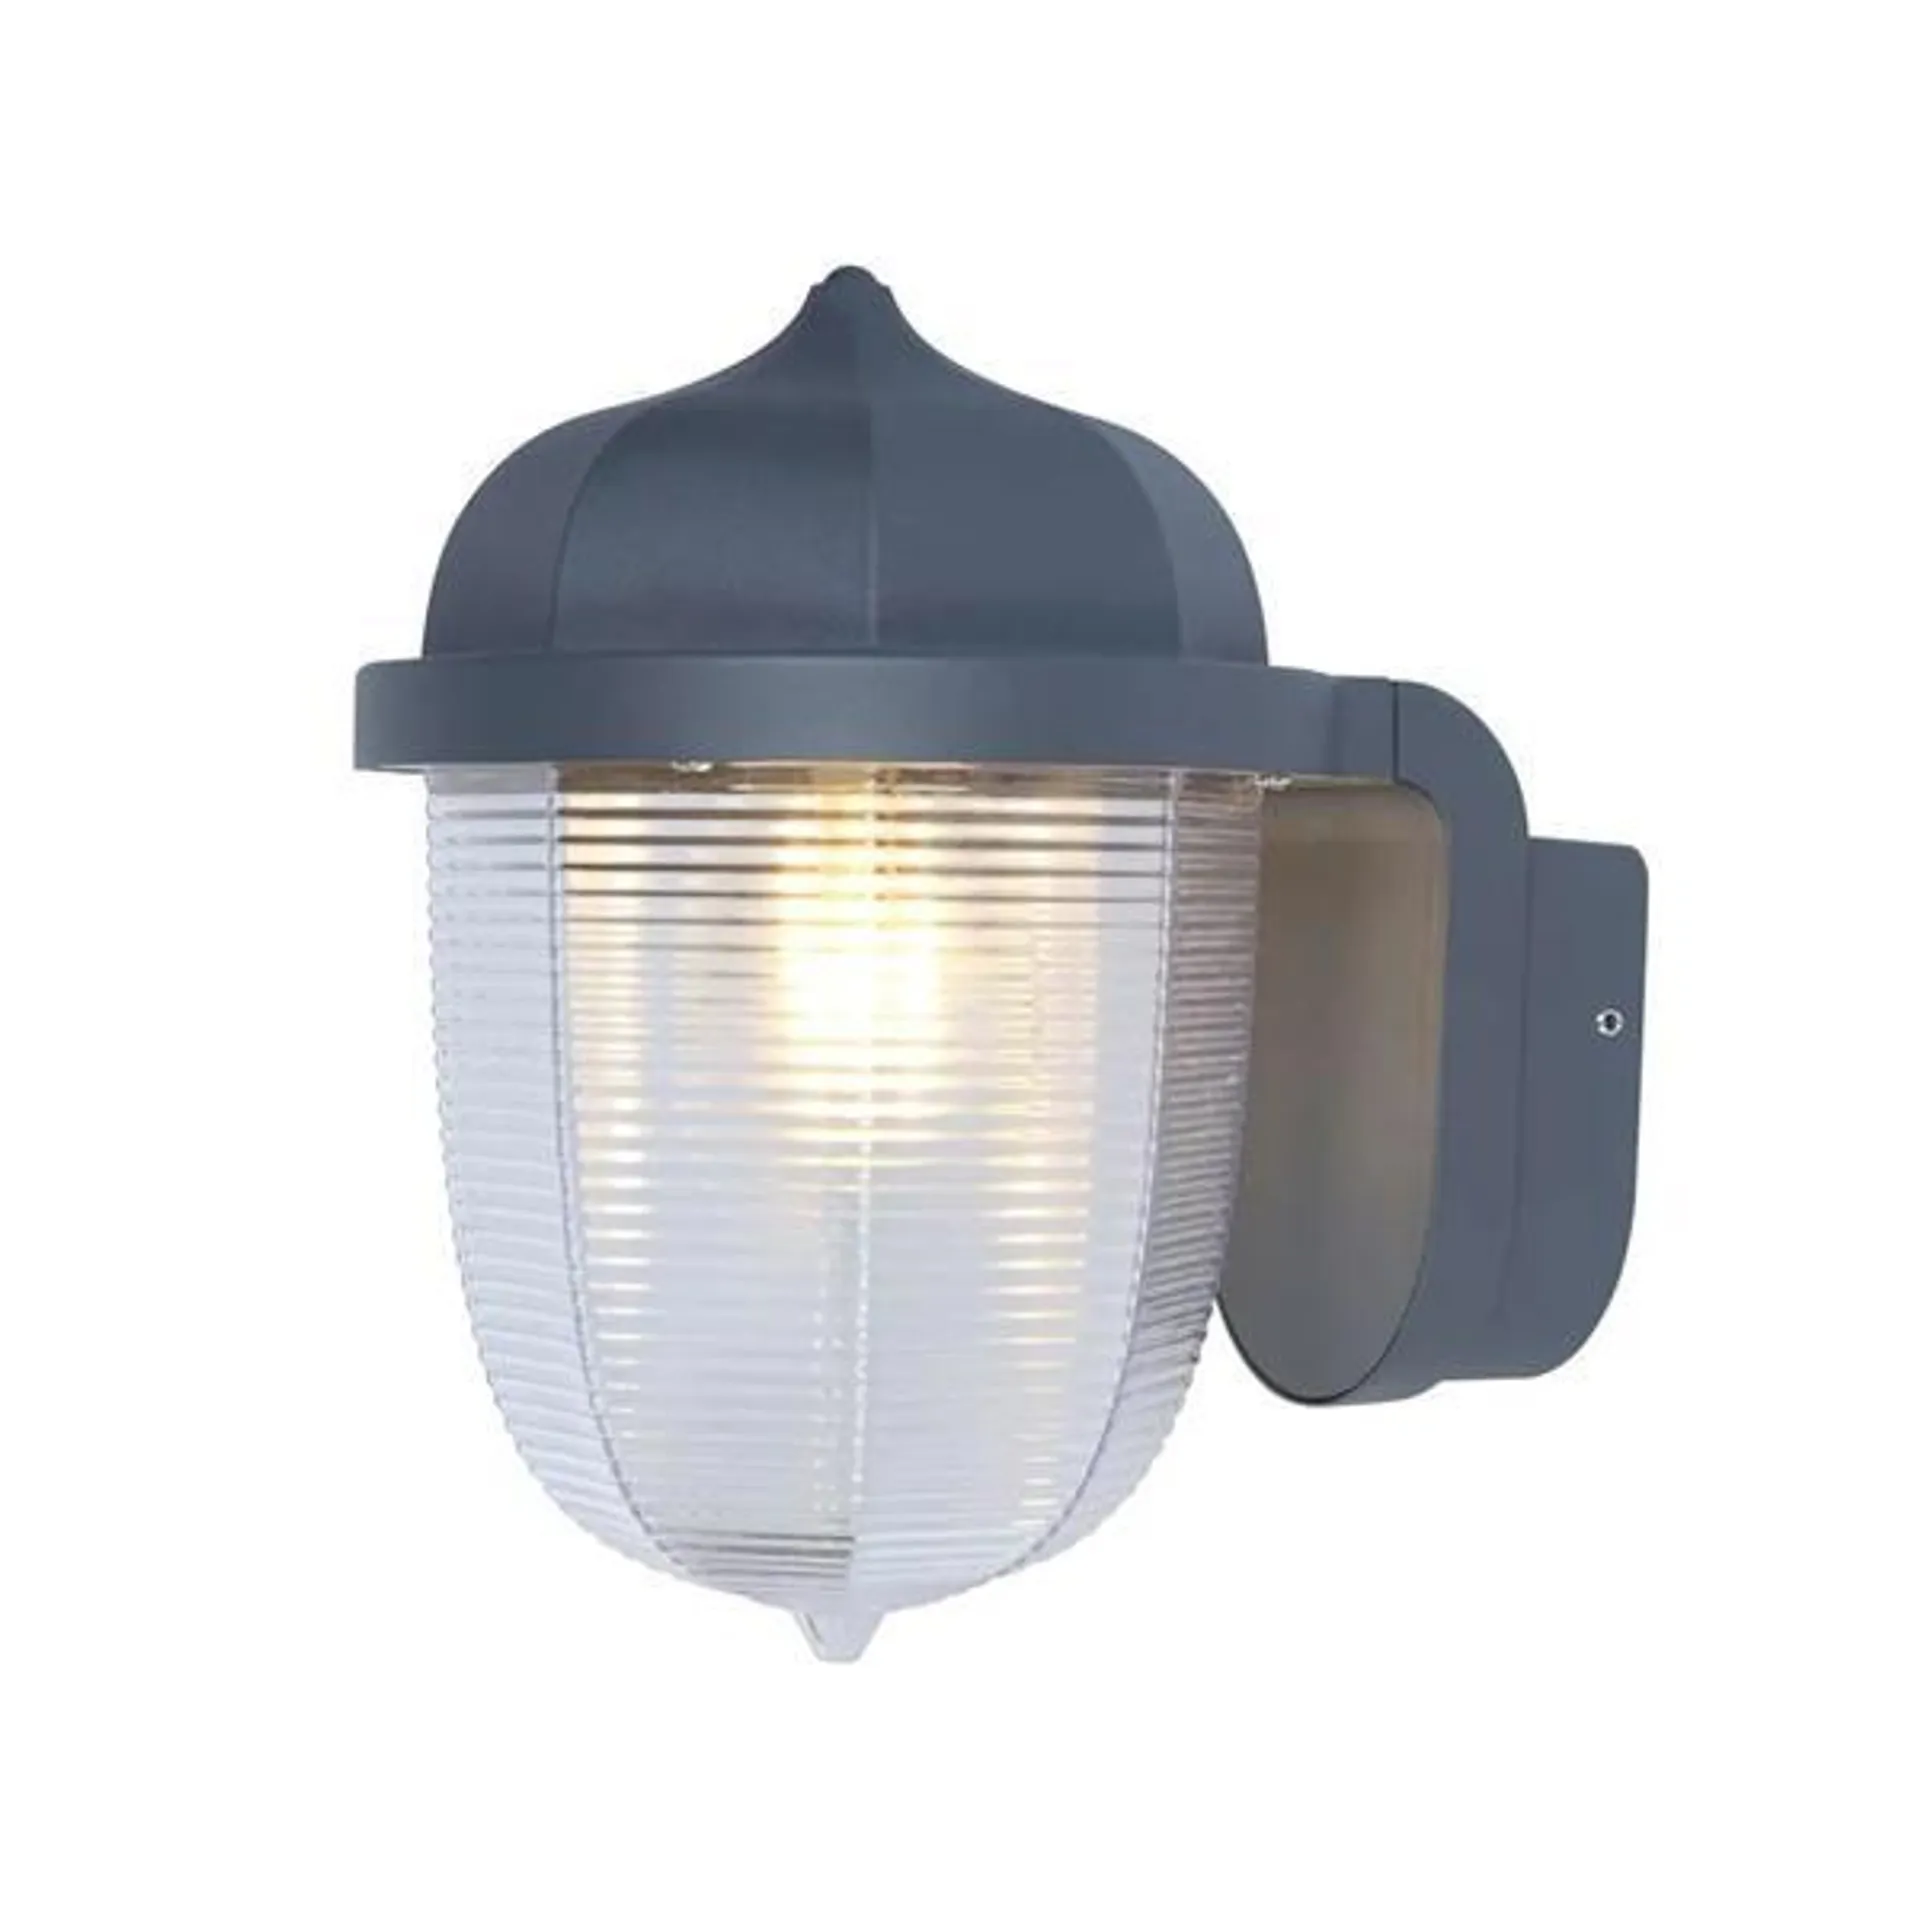 E27 Diffused Pavillion Lantern 8 Sided Charcoal Finish Ip44